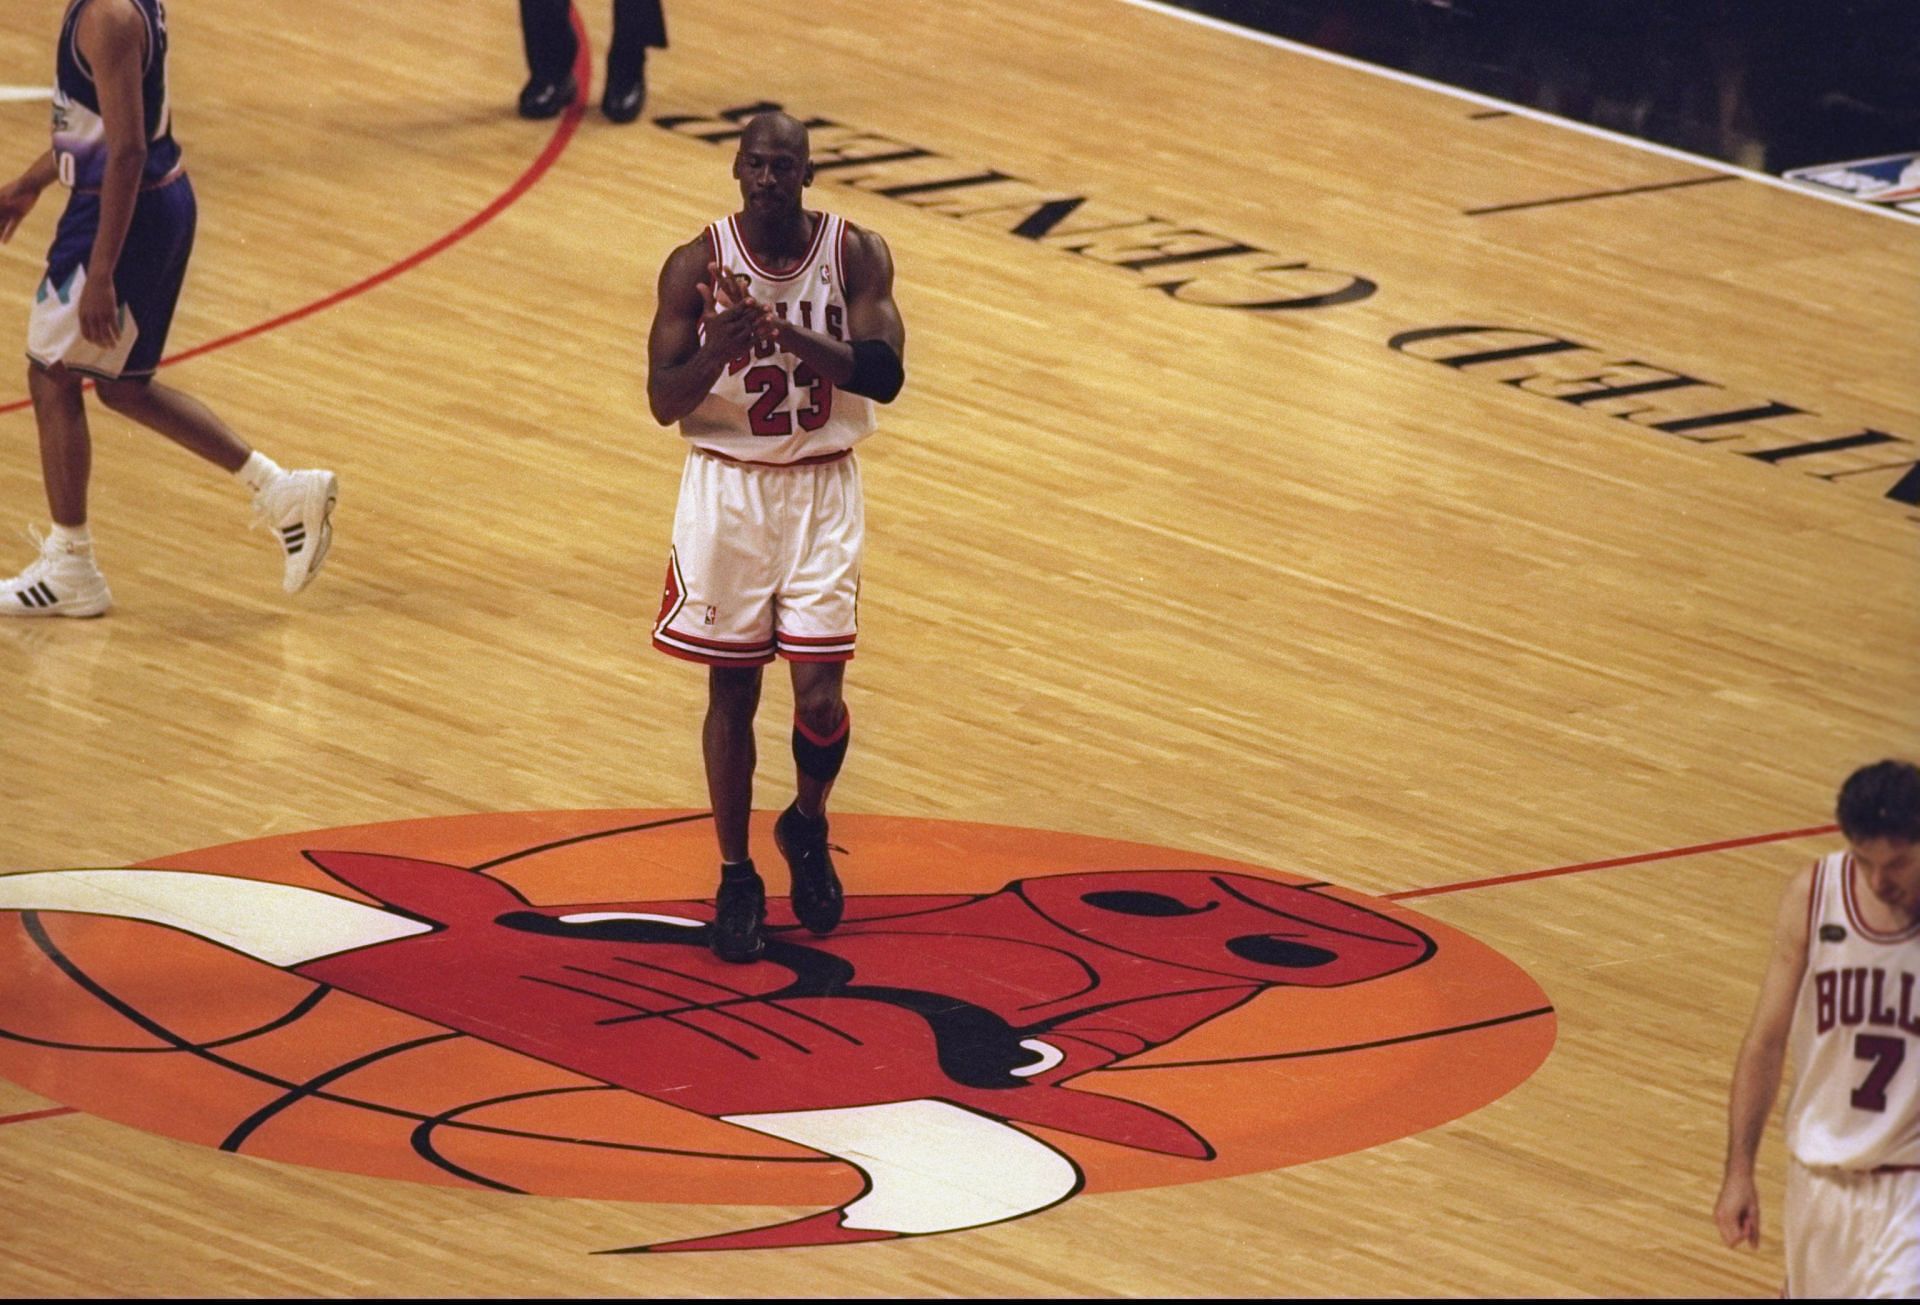 Chicago Bulls legend Michael Jordan